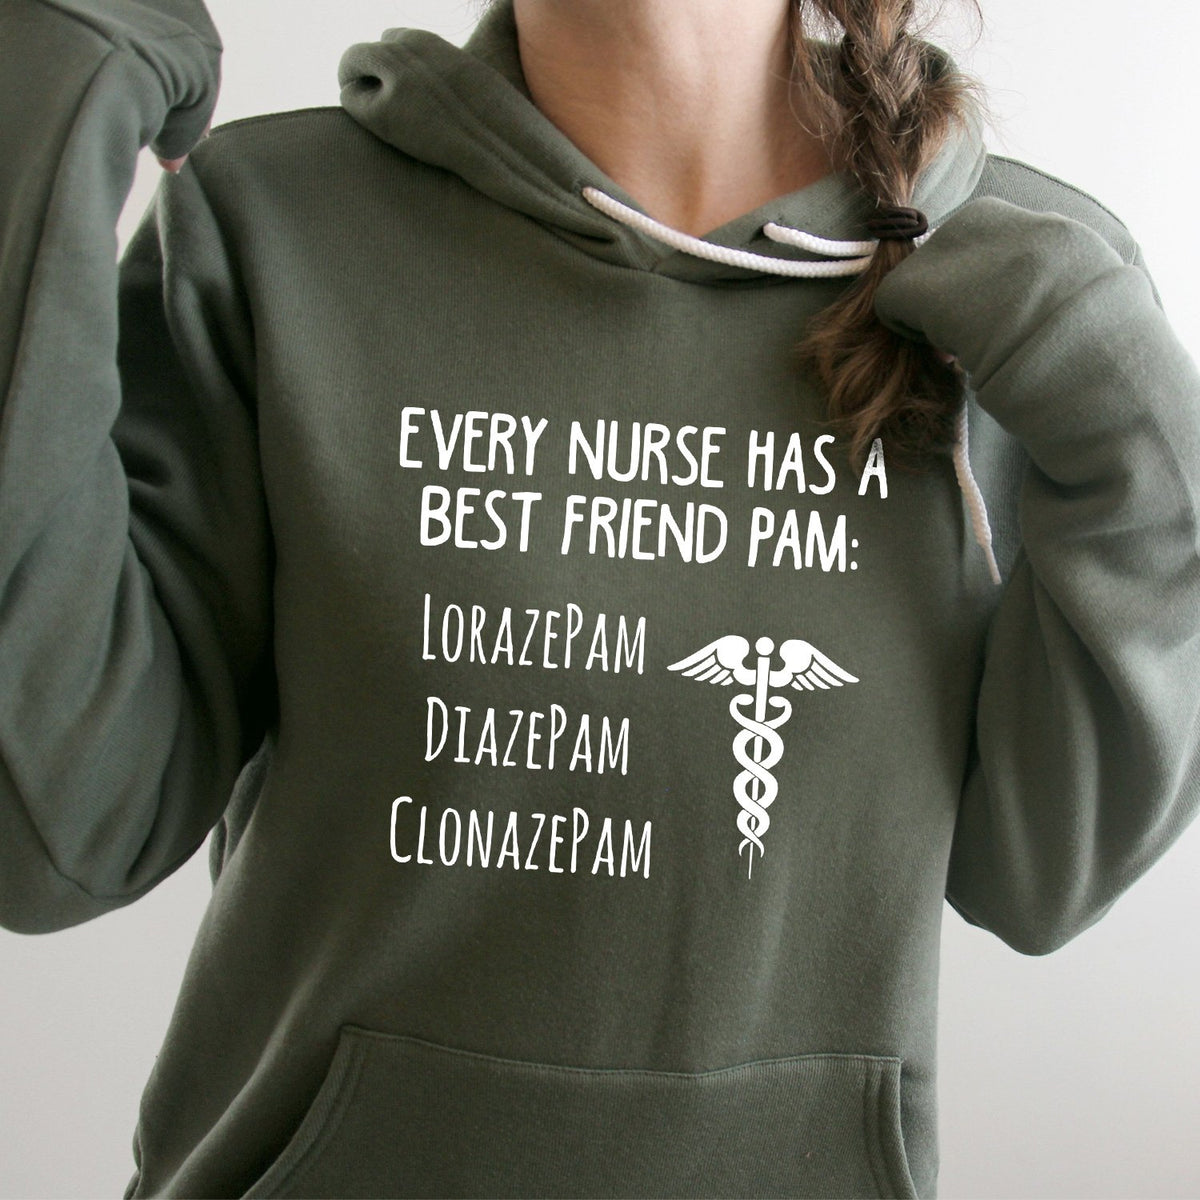 Every Nurse Has A Best Friend Pam - Hoodie Sweatshirt